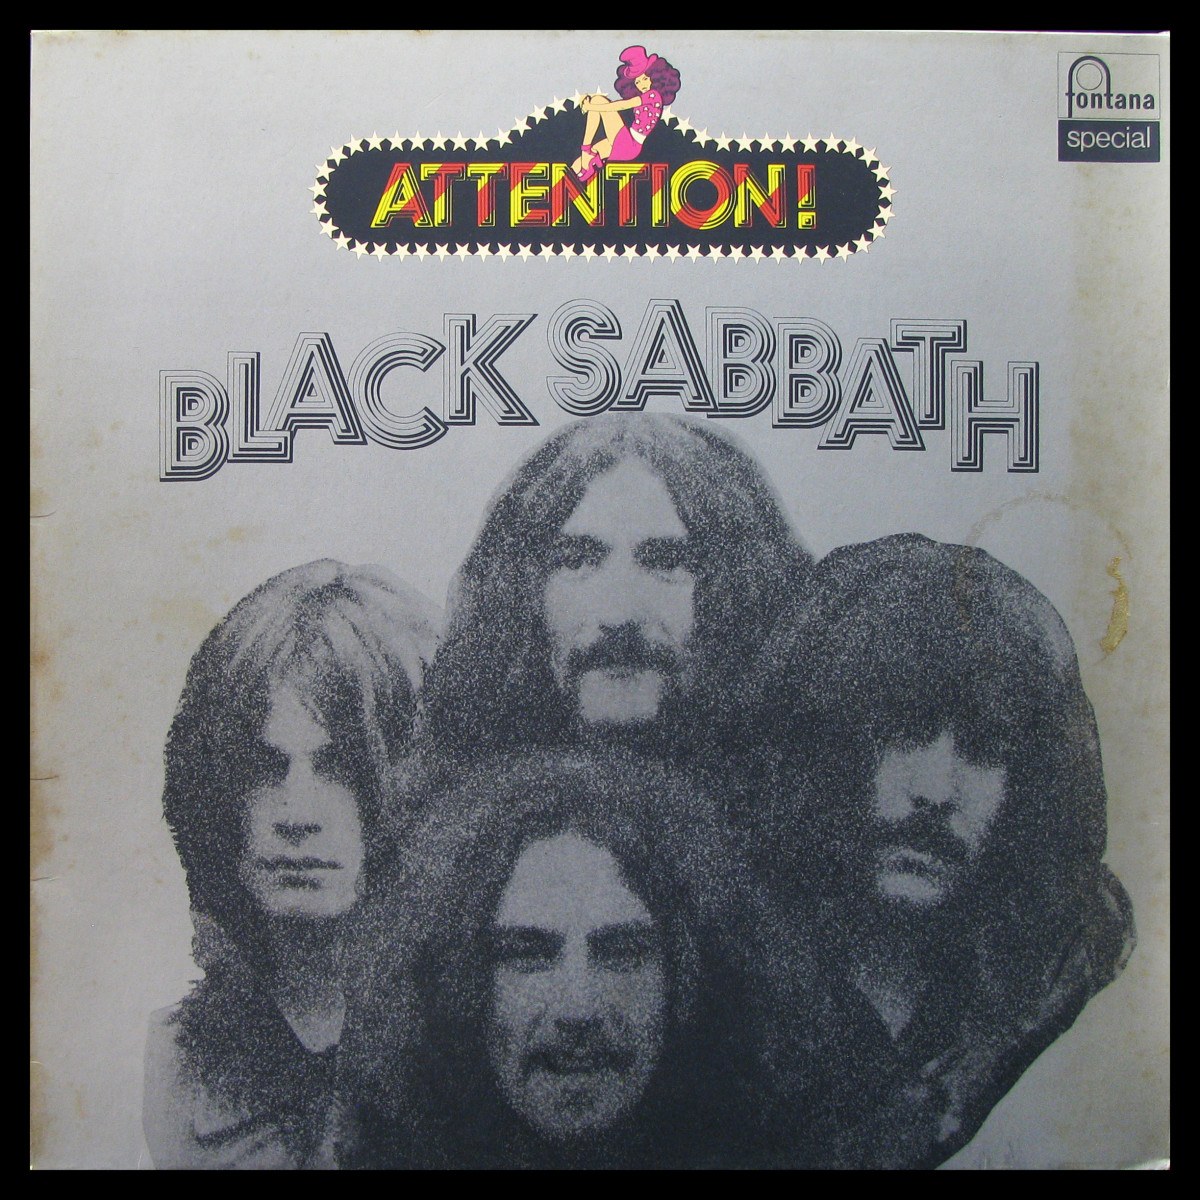 LP Black Sabbath — Attention! Black Sabbath! фото